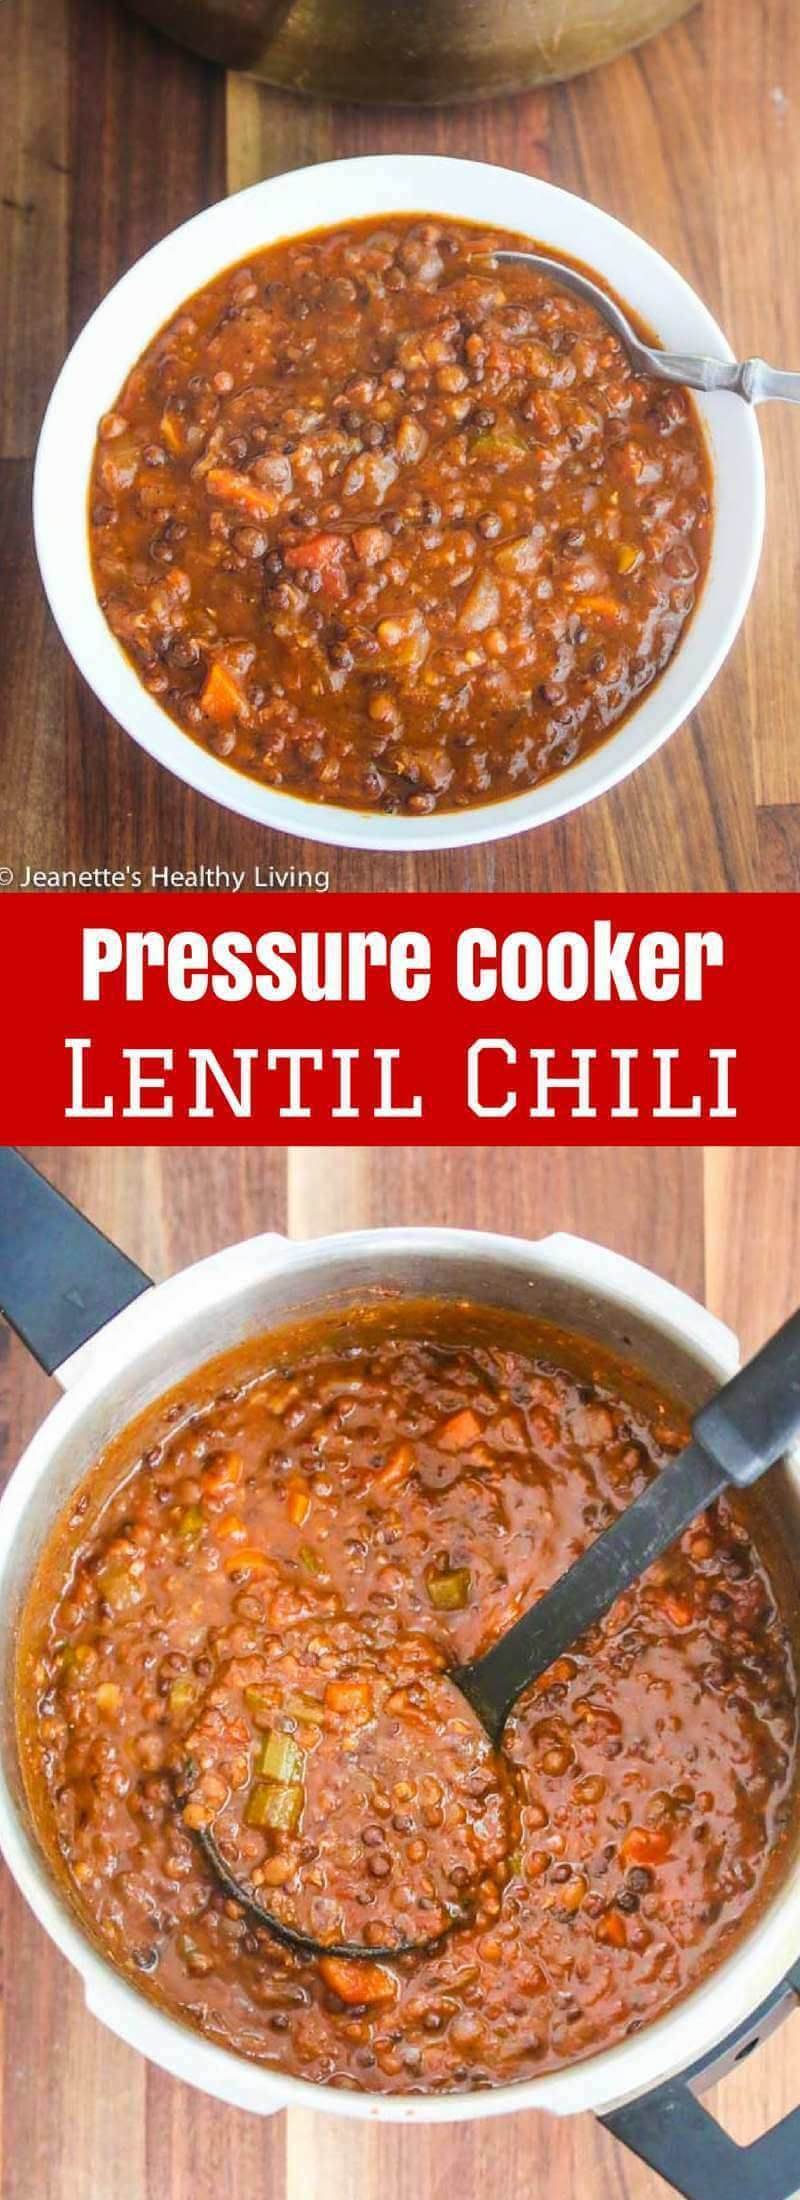 Pressure Cooker Vegan Recipes
 Pressure Cooker Instant Pot Lentil Chili